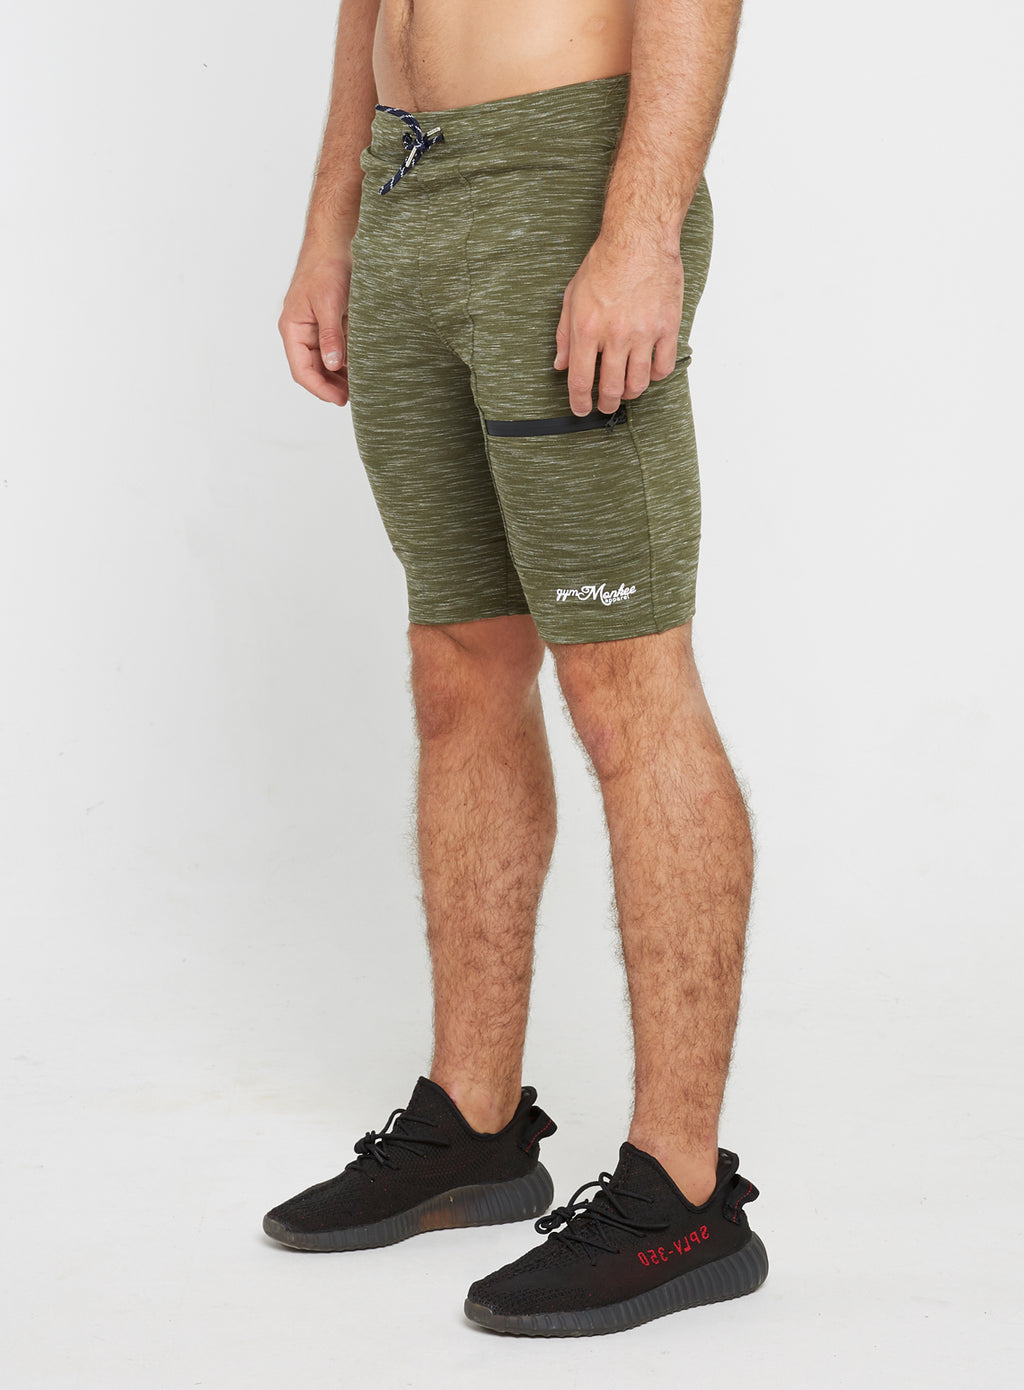 Gym Monkee - Olive Striped Shorts LEFT